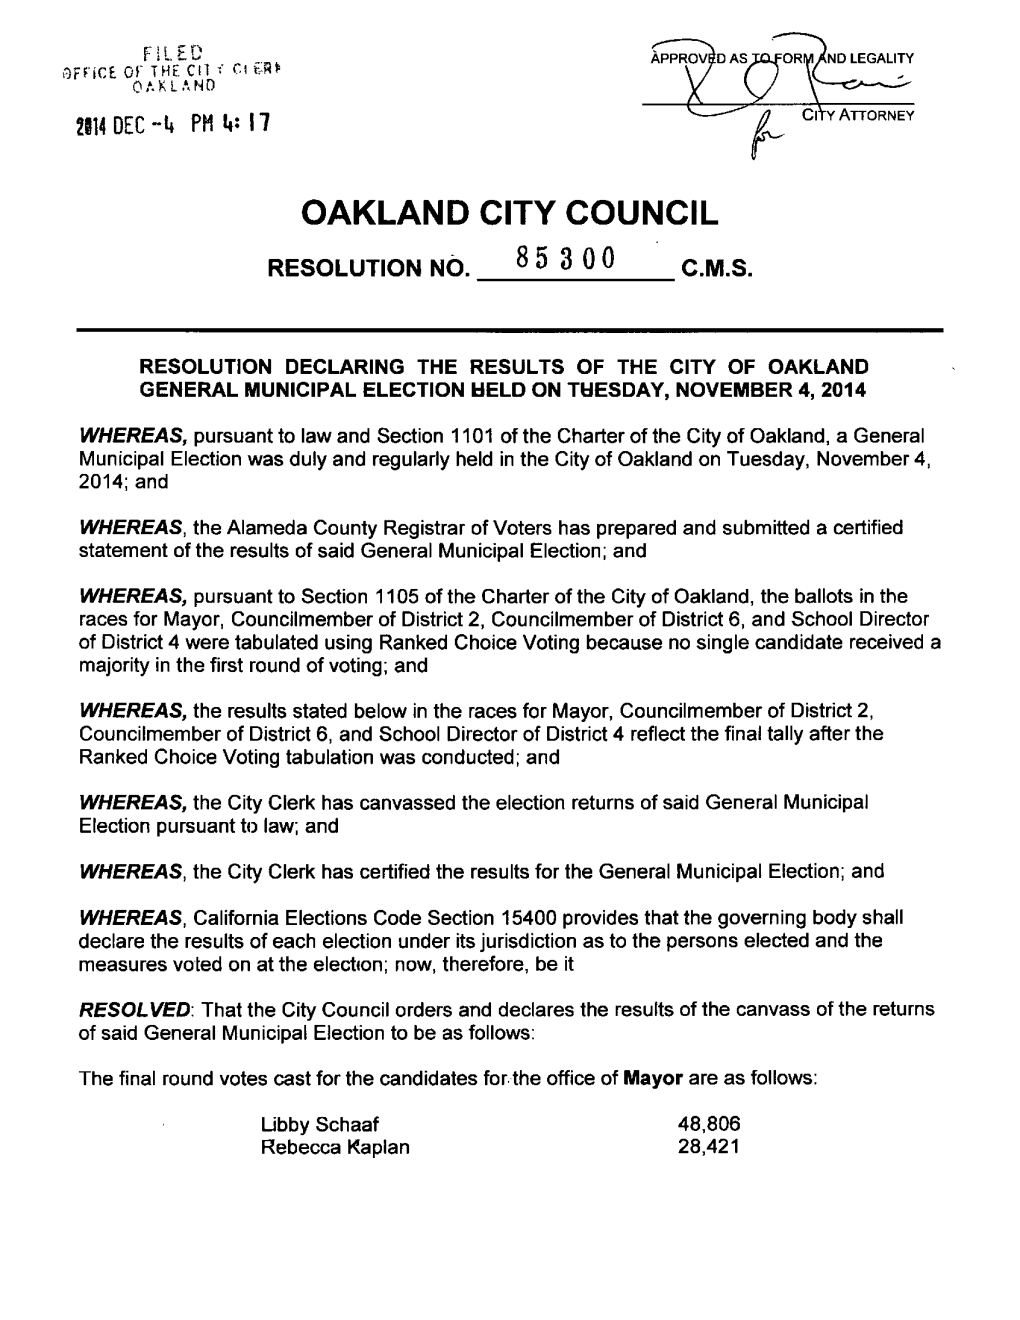 Oakland City Council Resolution No